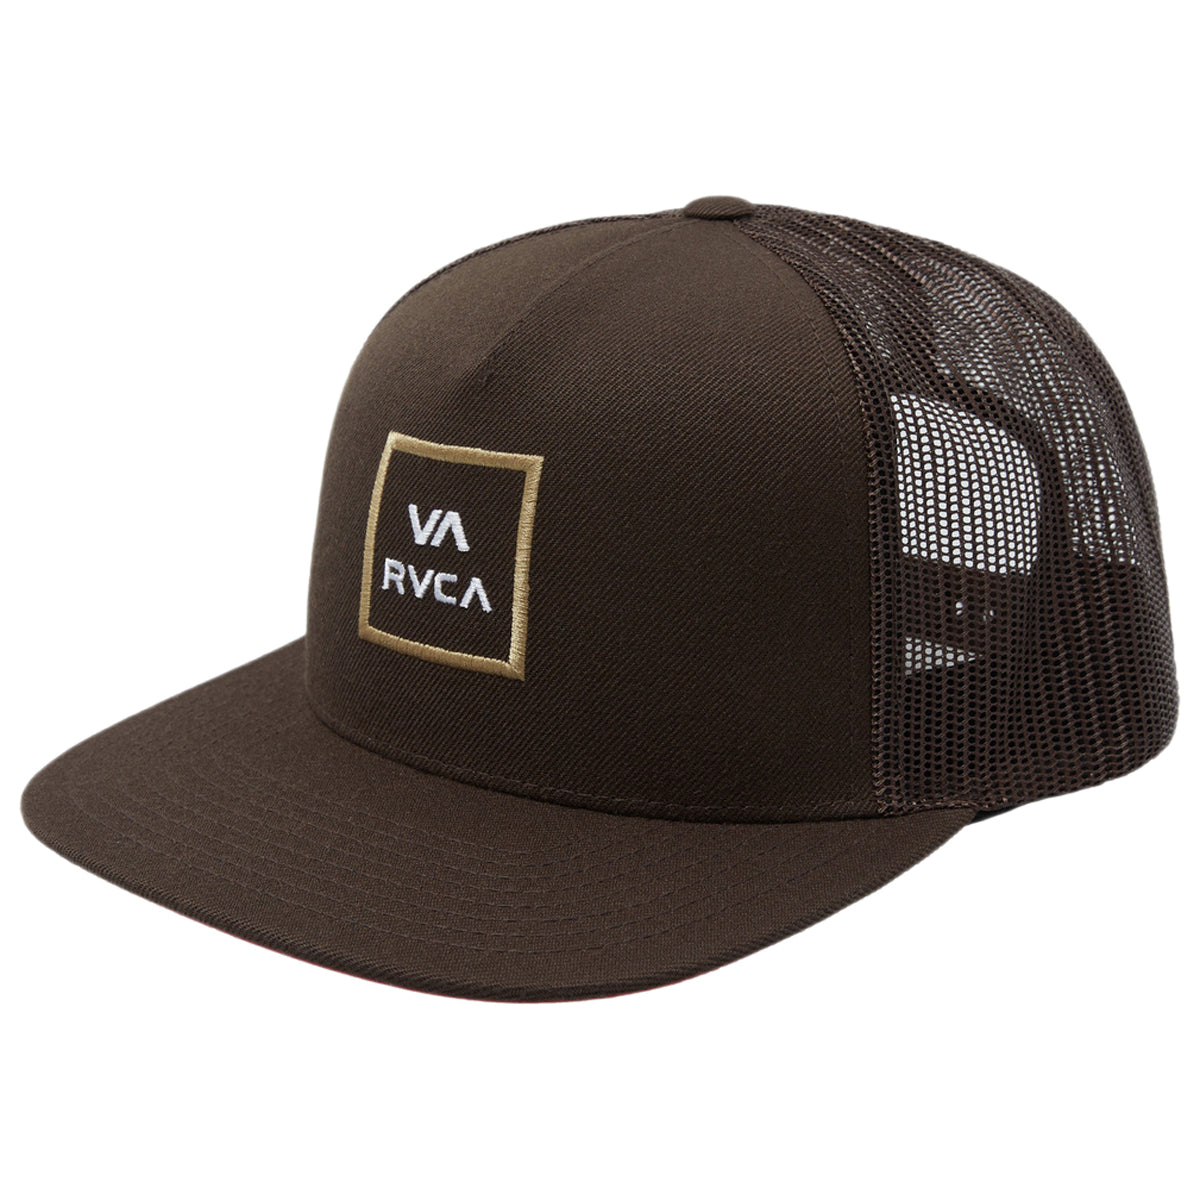 RVCA Va All The Way Trucker Hat - Chocolate image 1